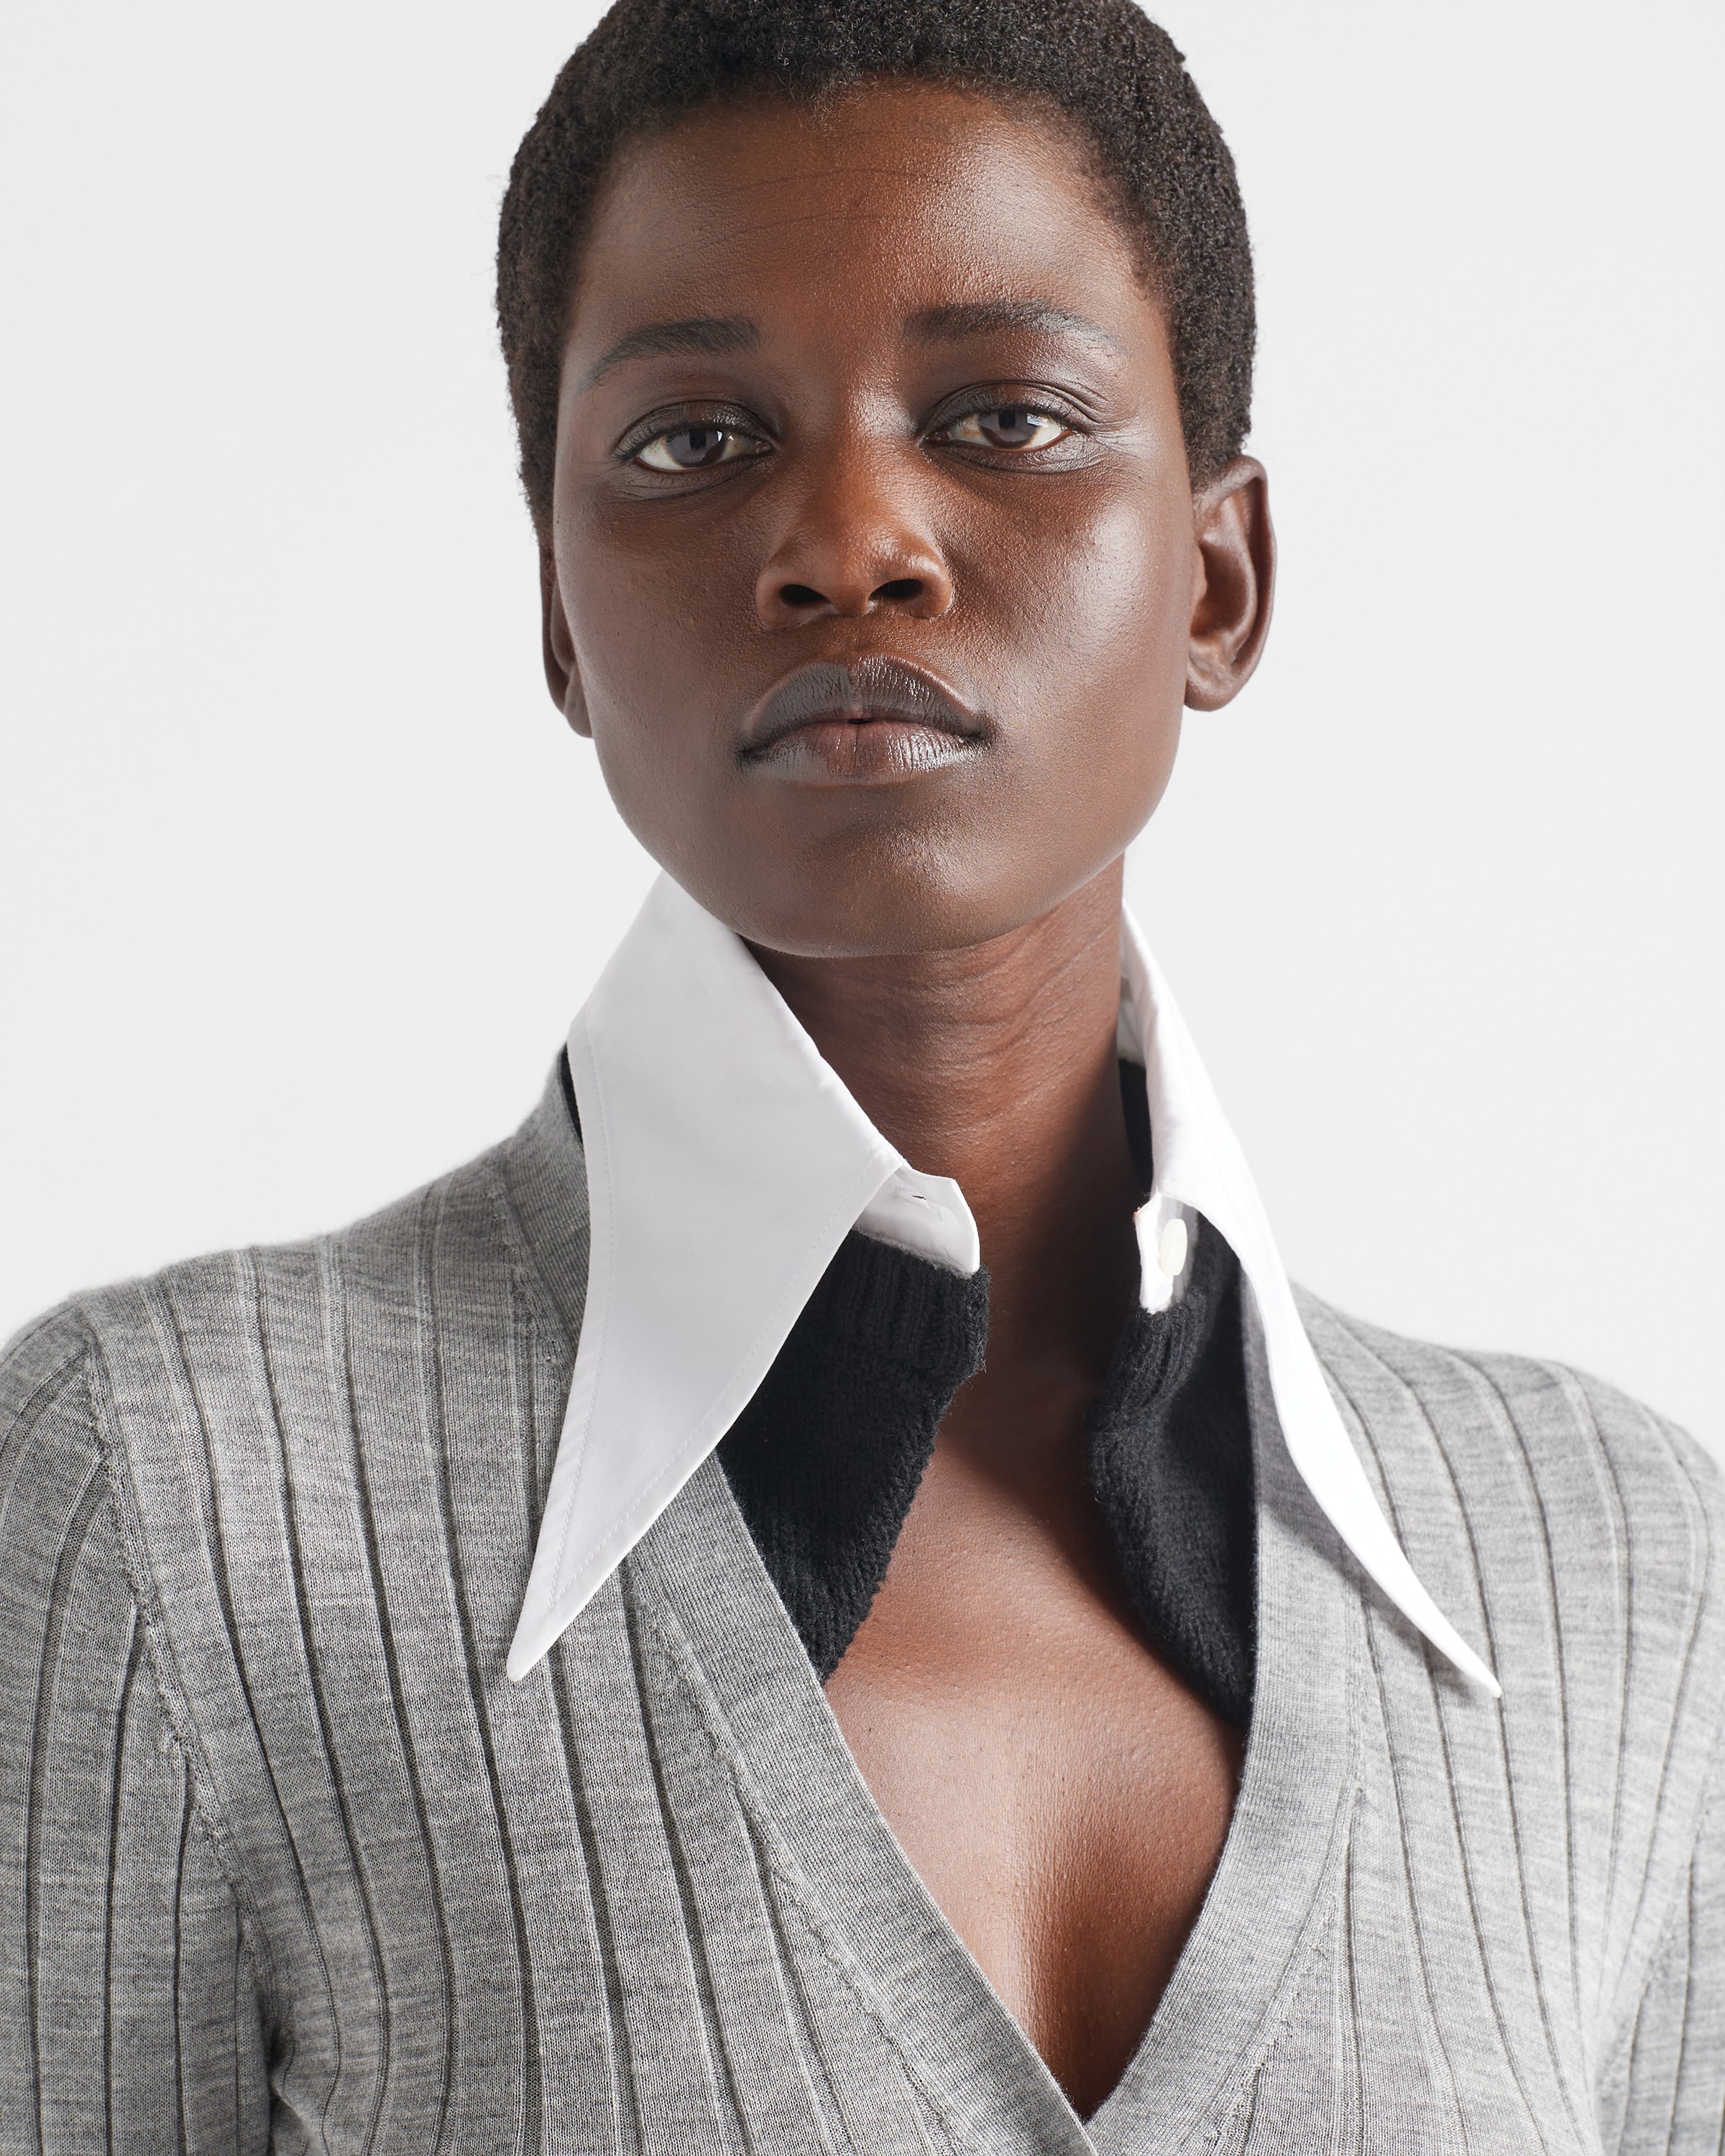 Prada Women's Cashmere and Silk Cardigan with Collar - Grey Multi - Size 4